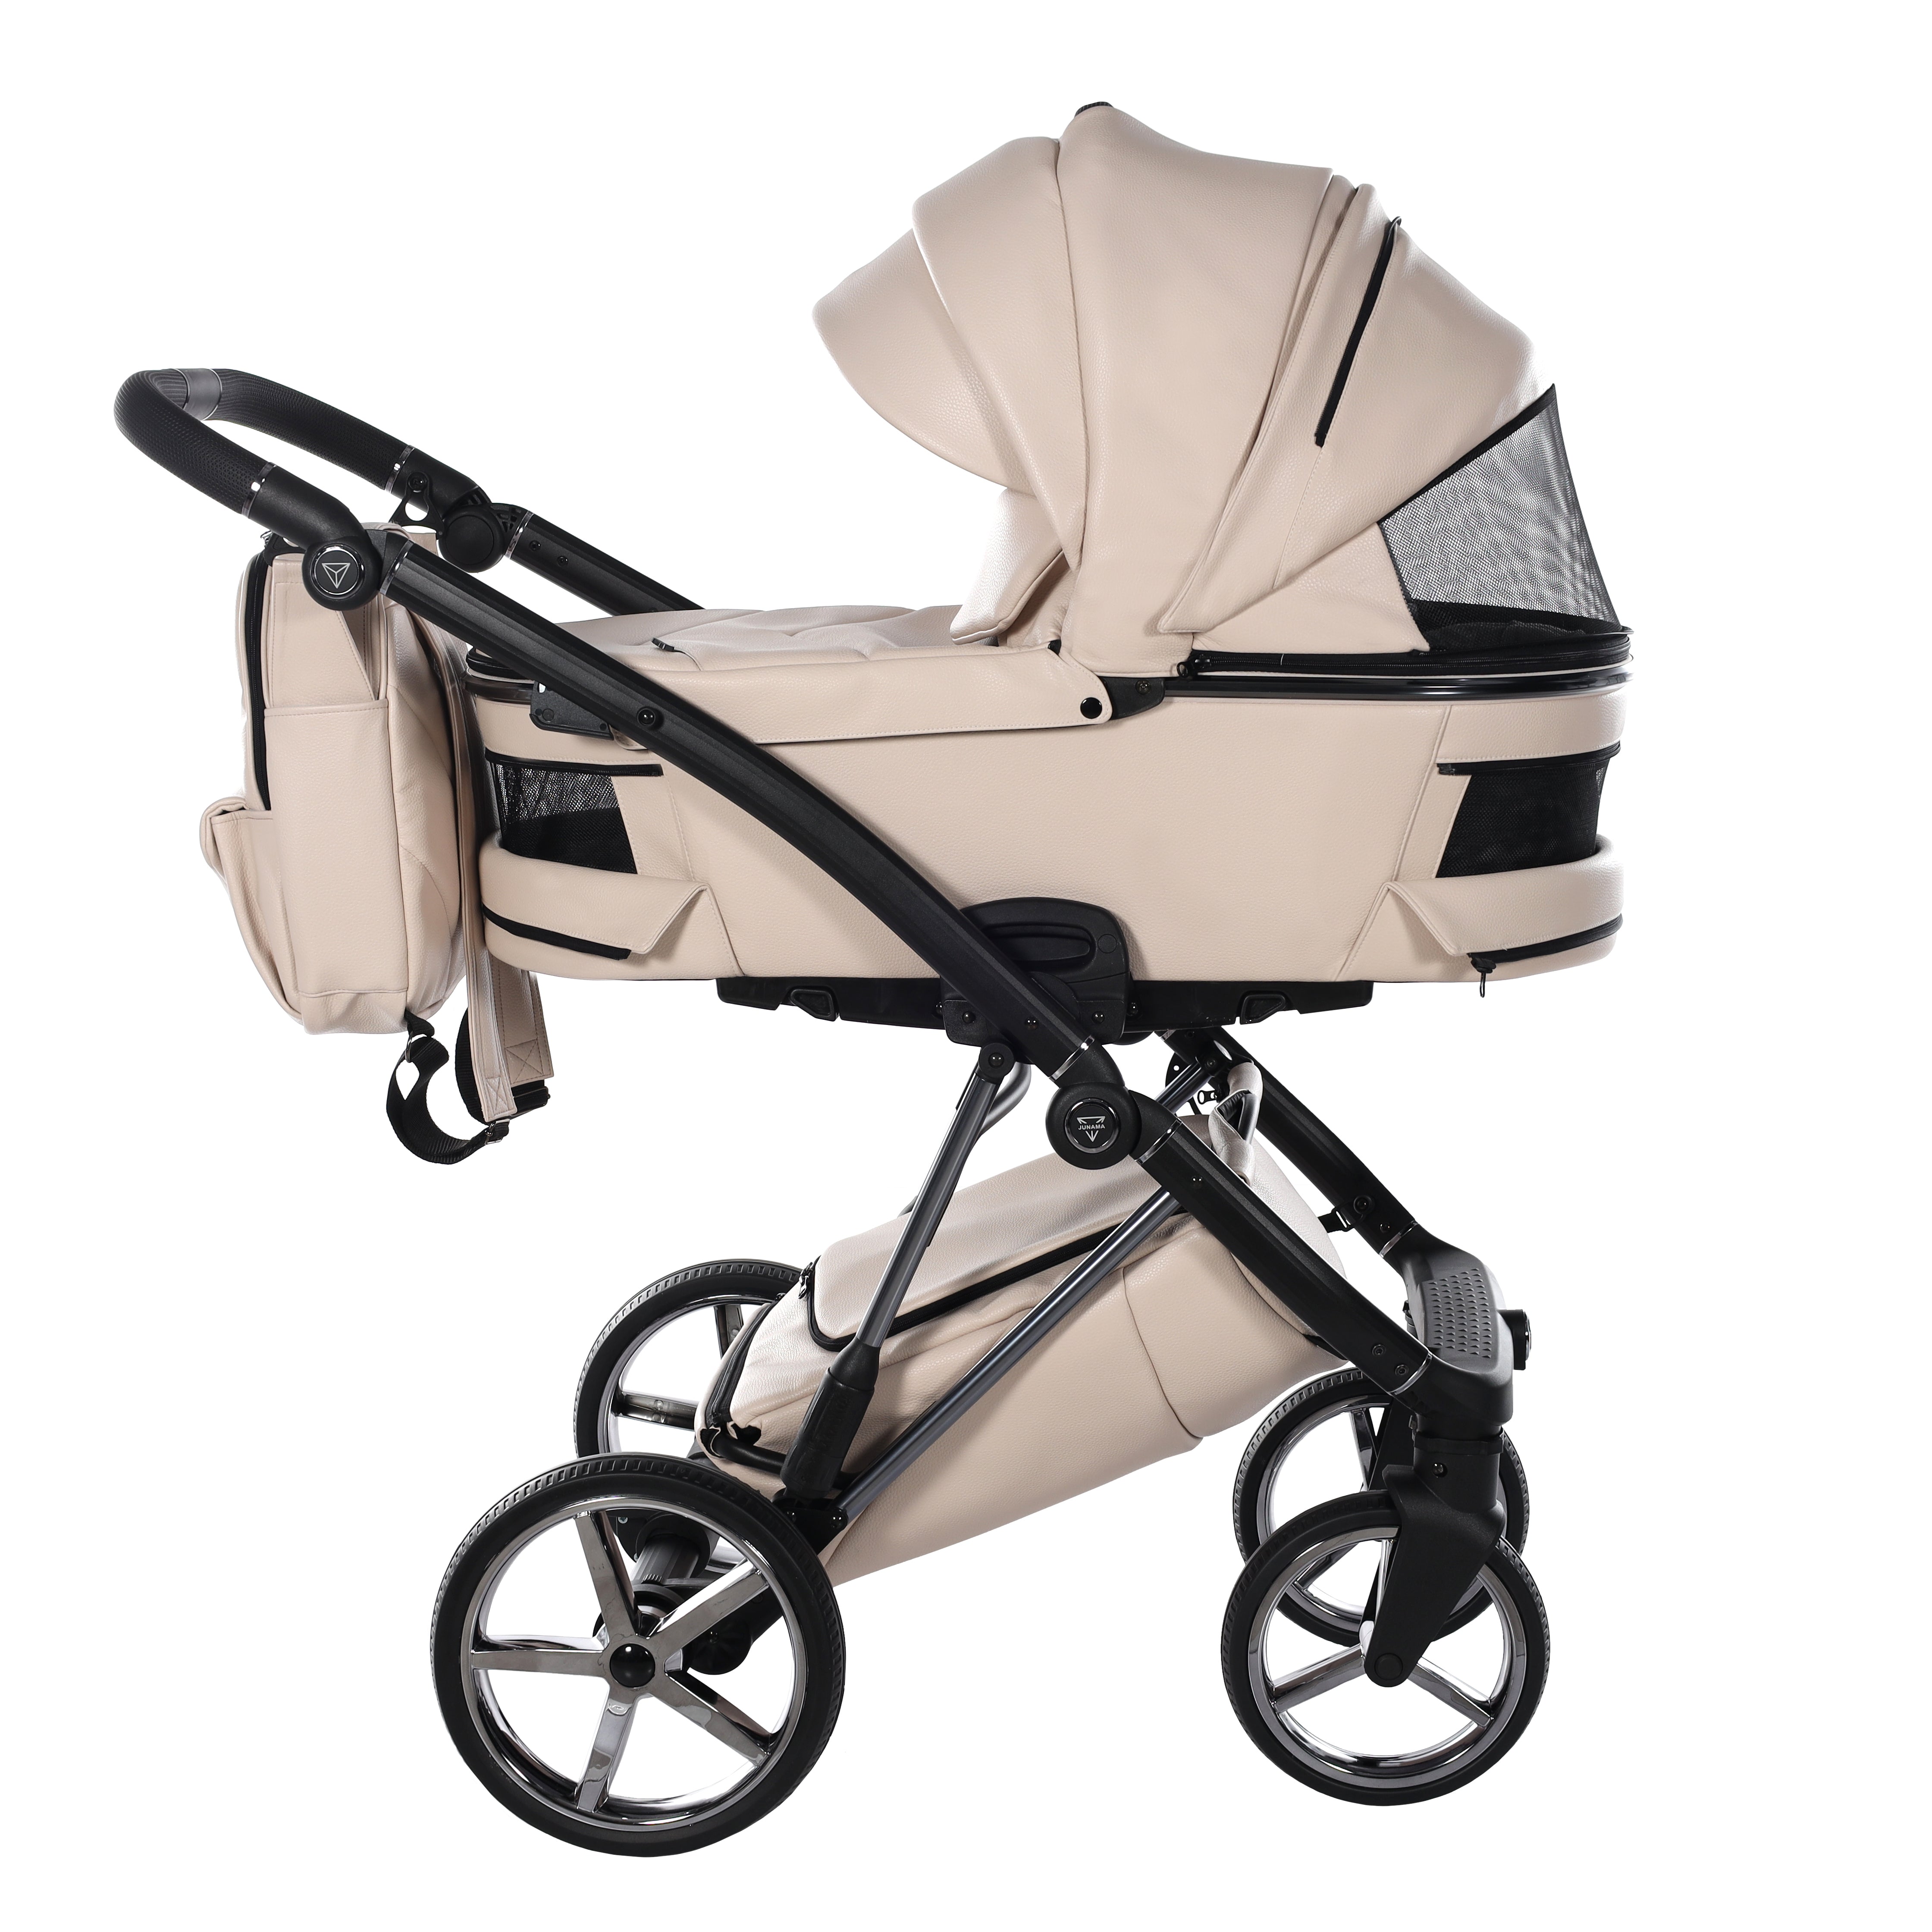 Junama AIR Premium V3, baby stroller and bassinet 2 in 1 - BEIGE, Code number: JUNAIRP02